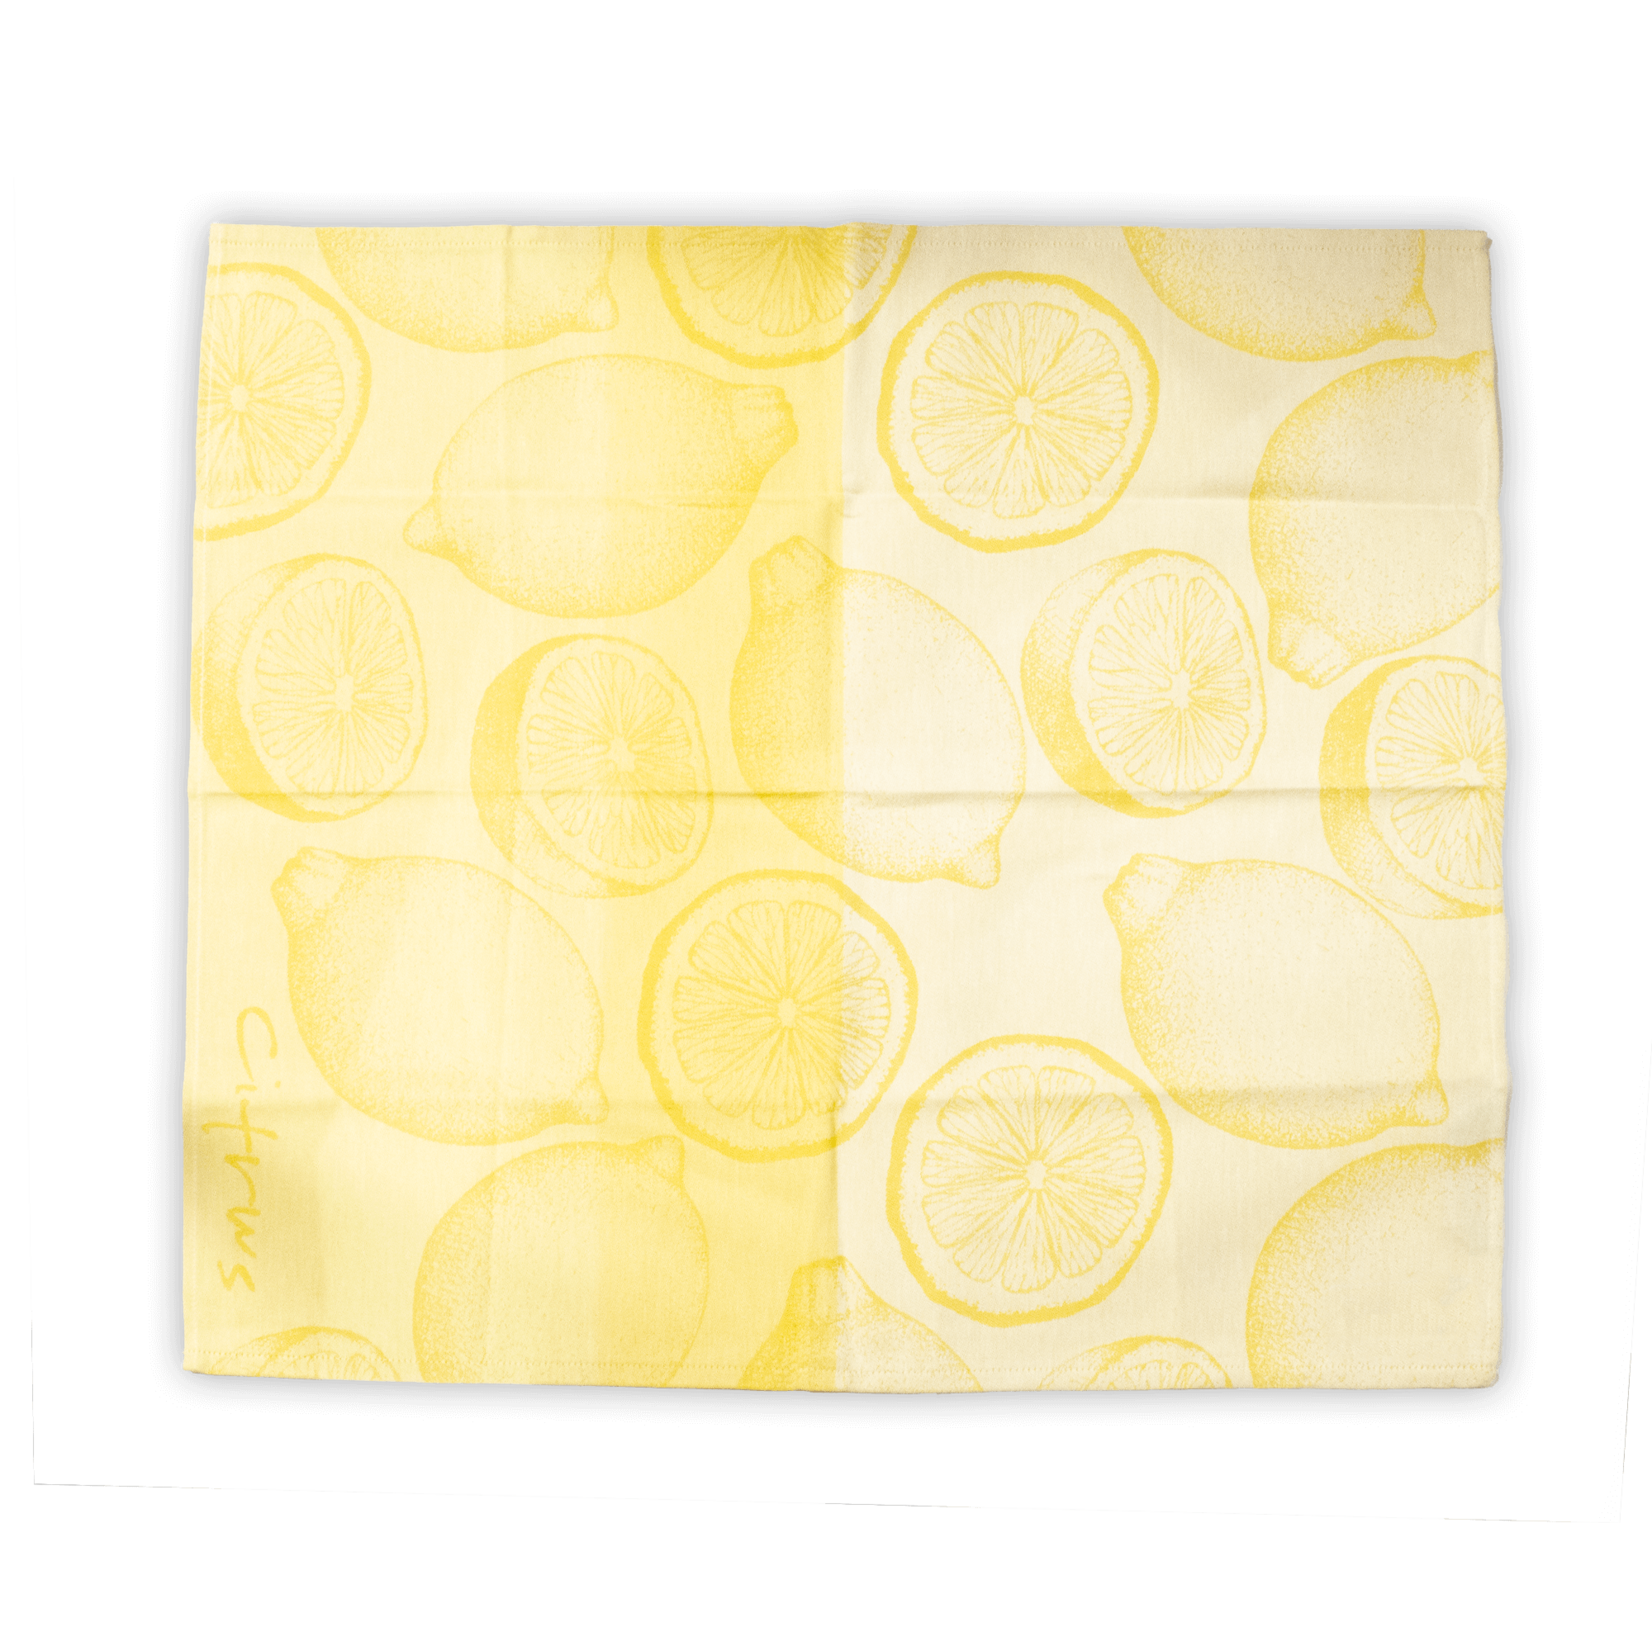 DDDDD DDDDD Tea Towel - Citrus Yellow